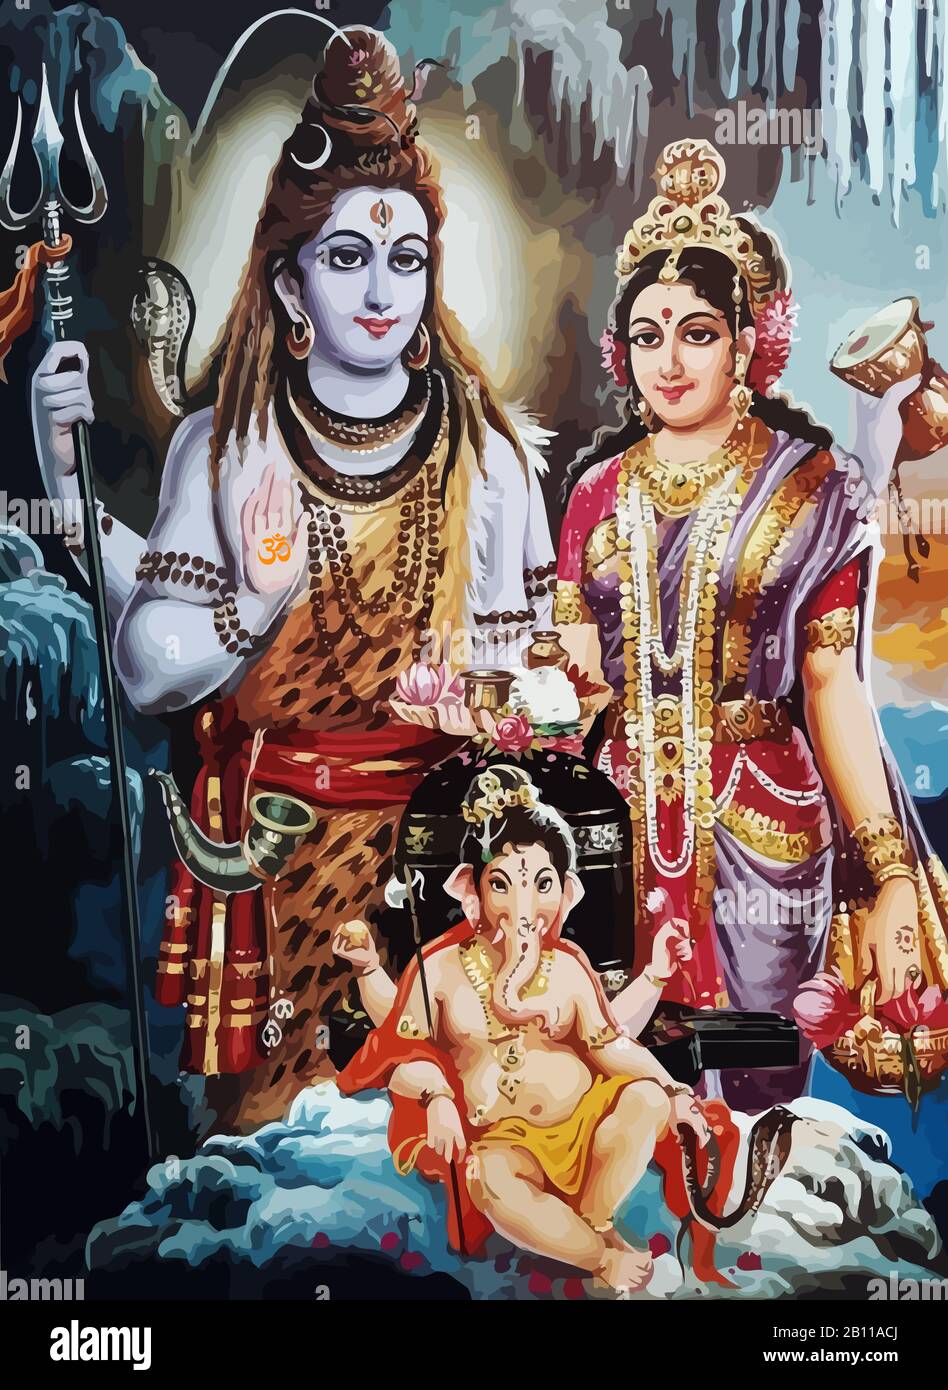 hinduism lord shiva spiritual Saraswati illustration ganesha holy snake  Stock Photo - Alamy